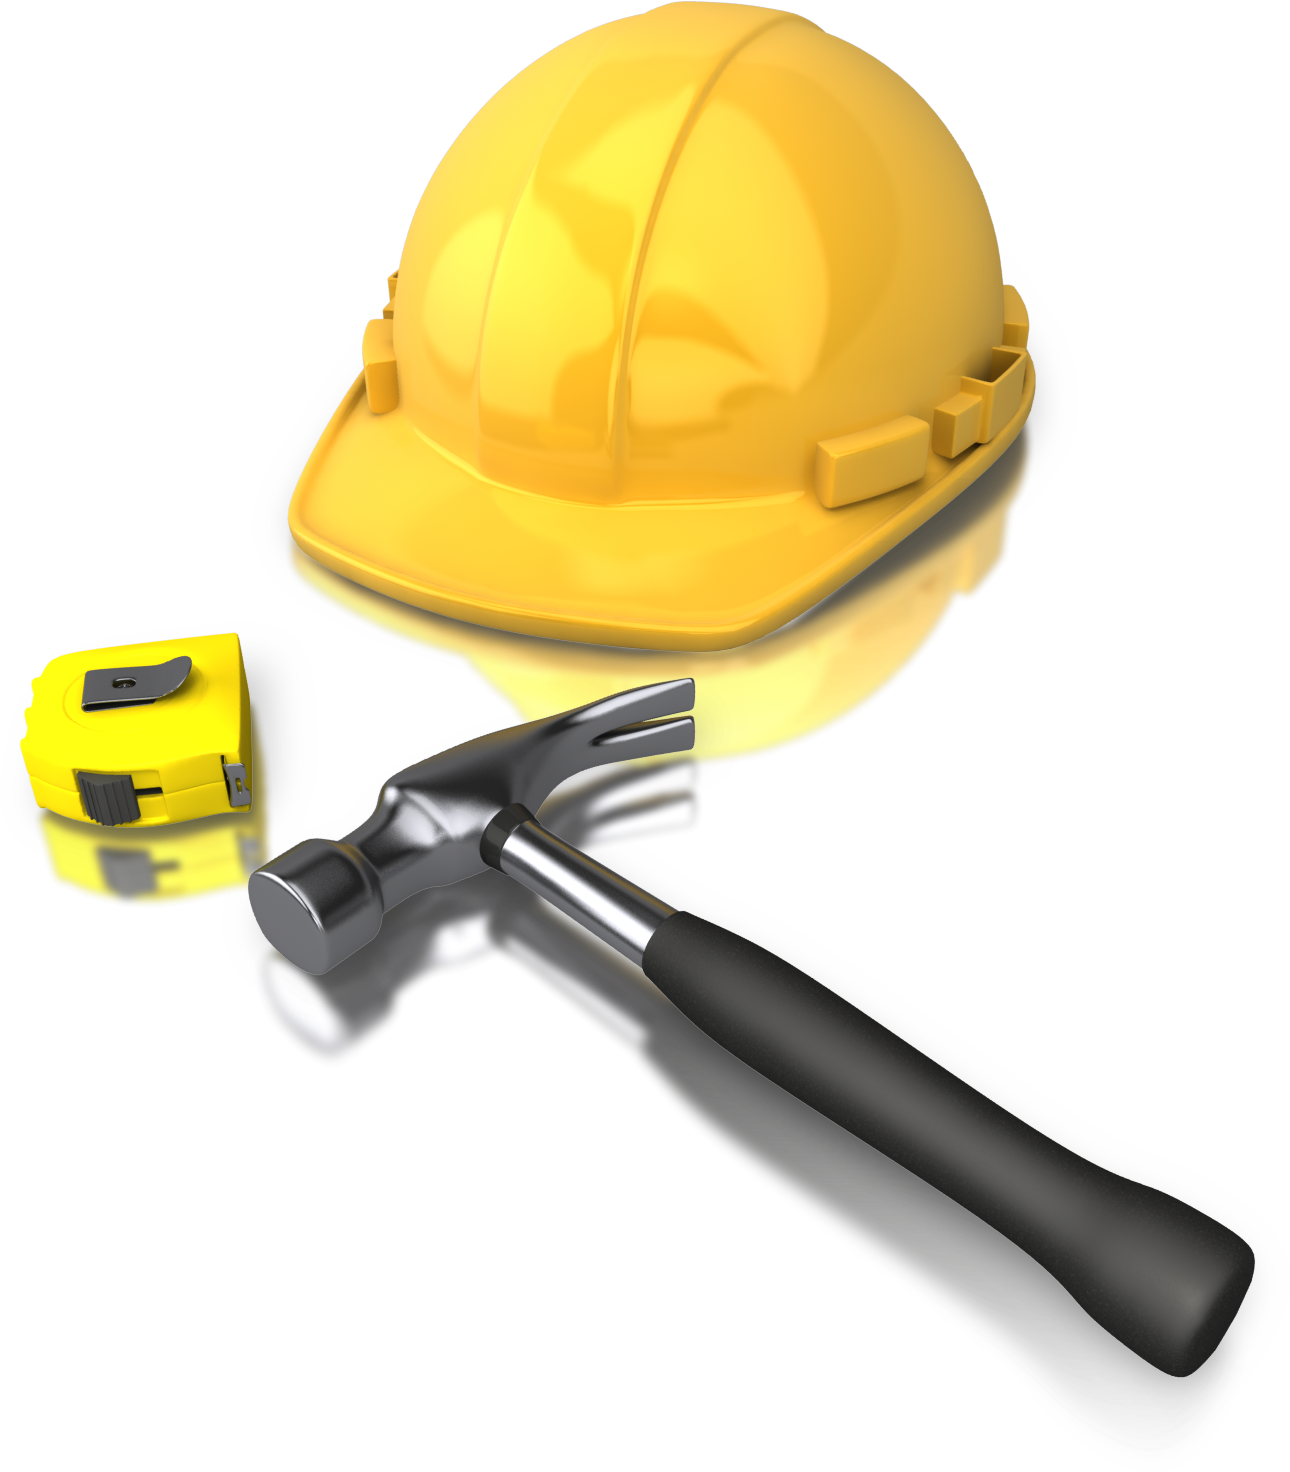 Construction Worker Tools 1600 Clr 3064 - Construction Worker Equipment Clipart (1600x1500)